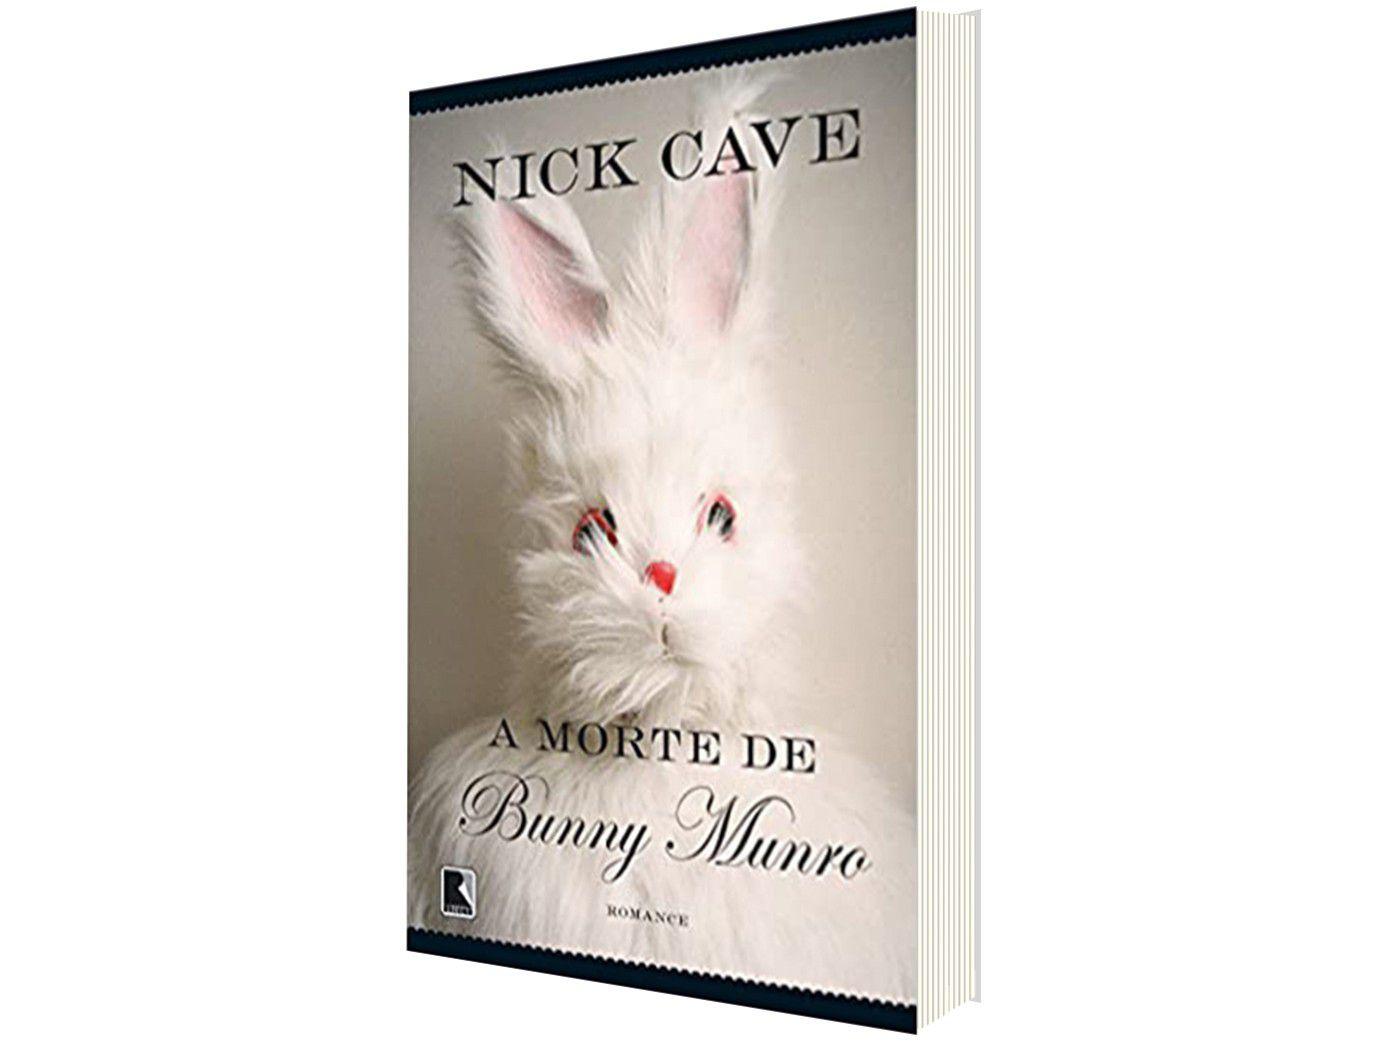 “A morte de Bunny Munro”, de Nick Cave